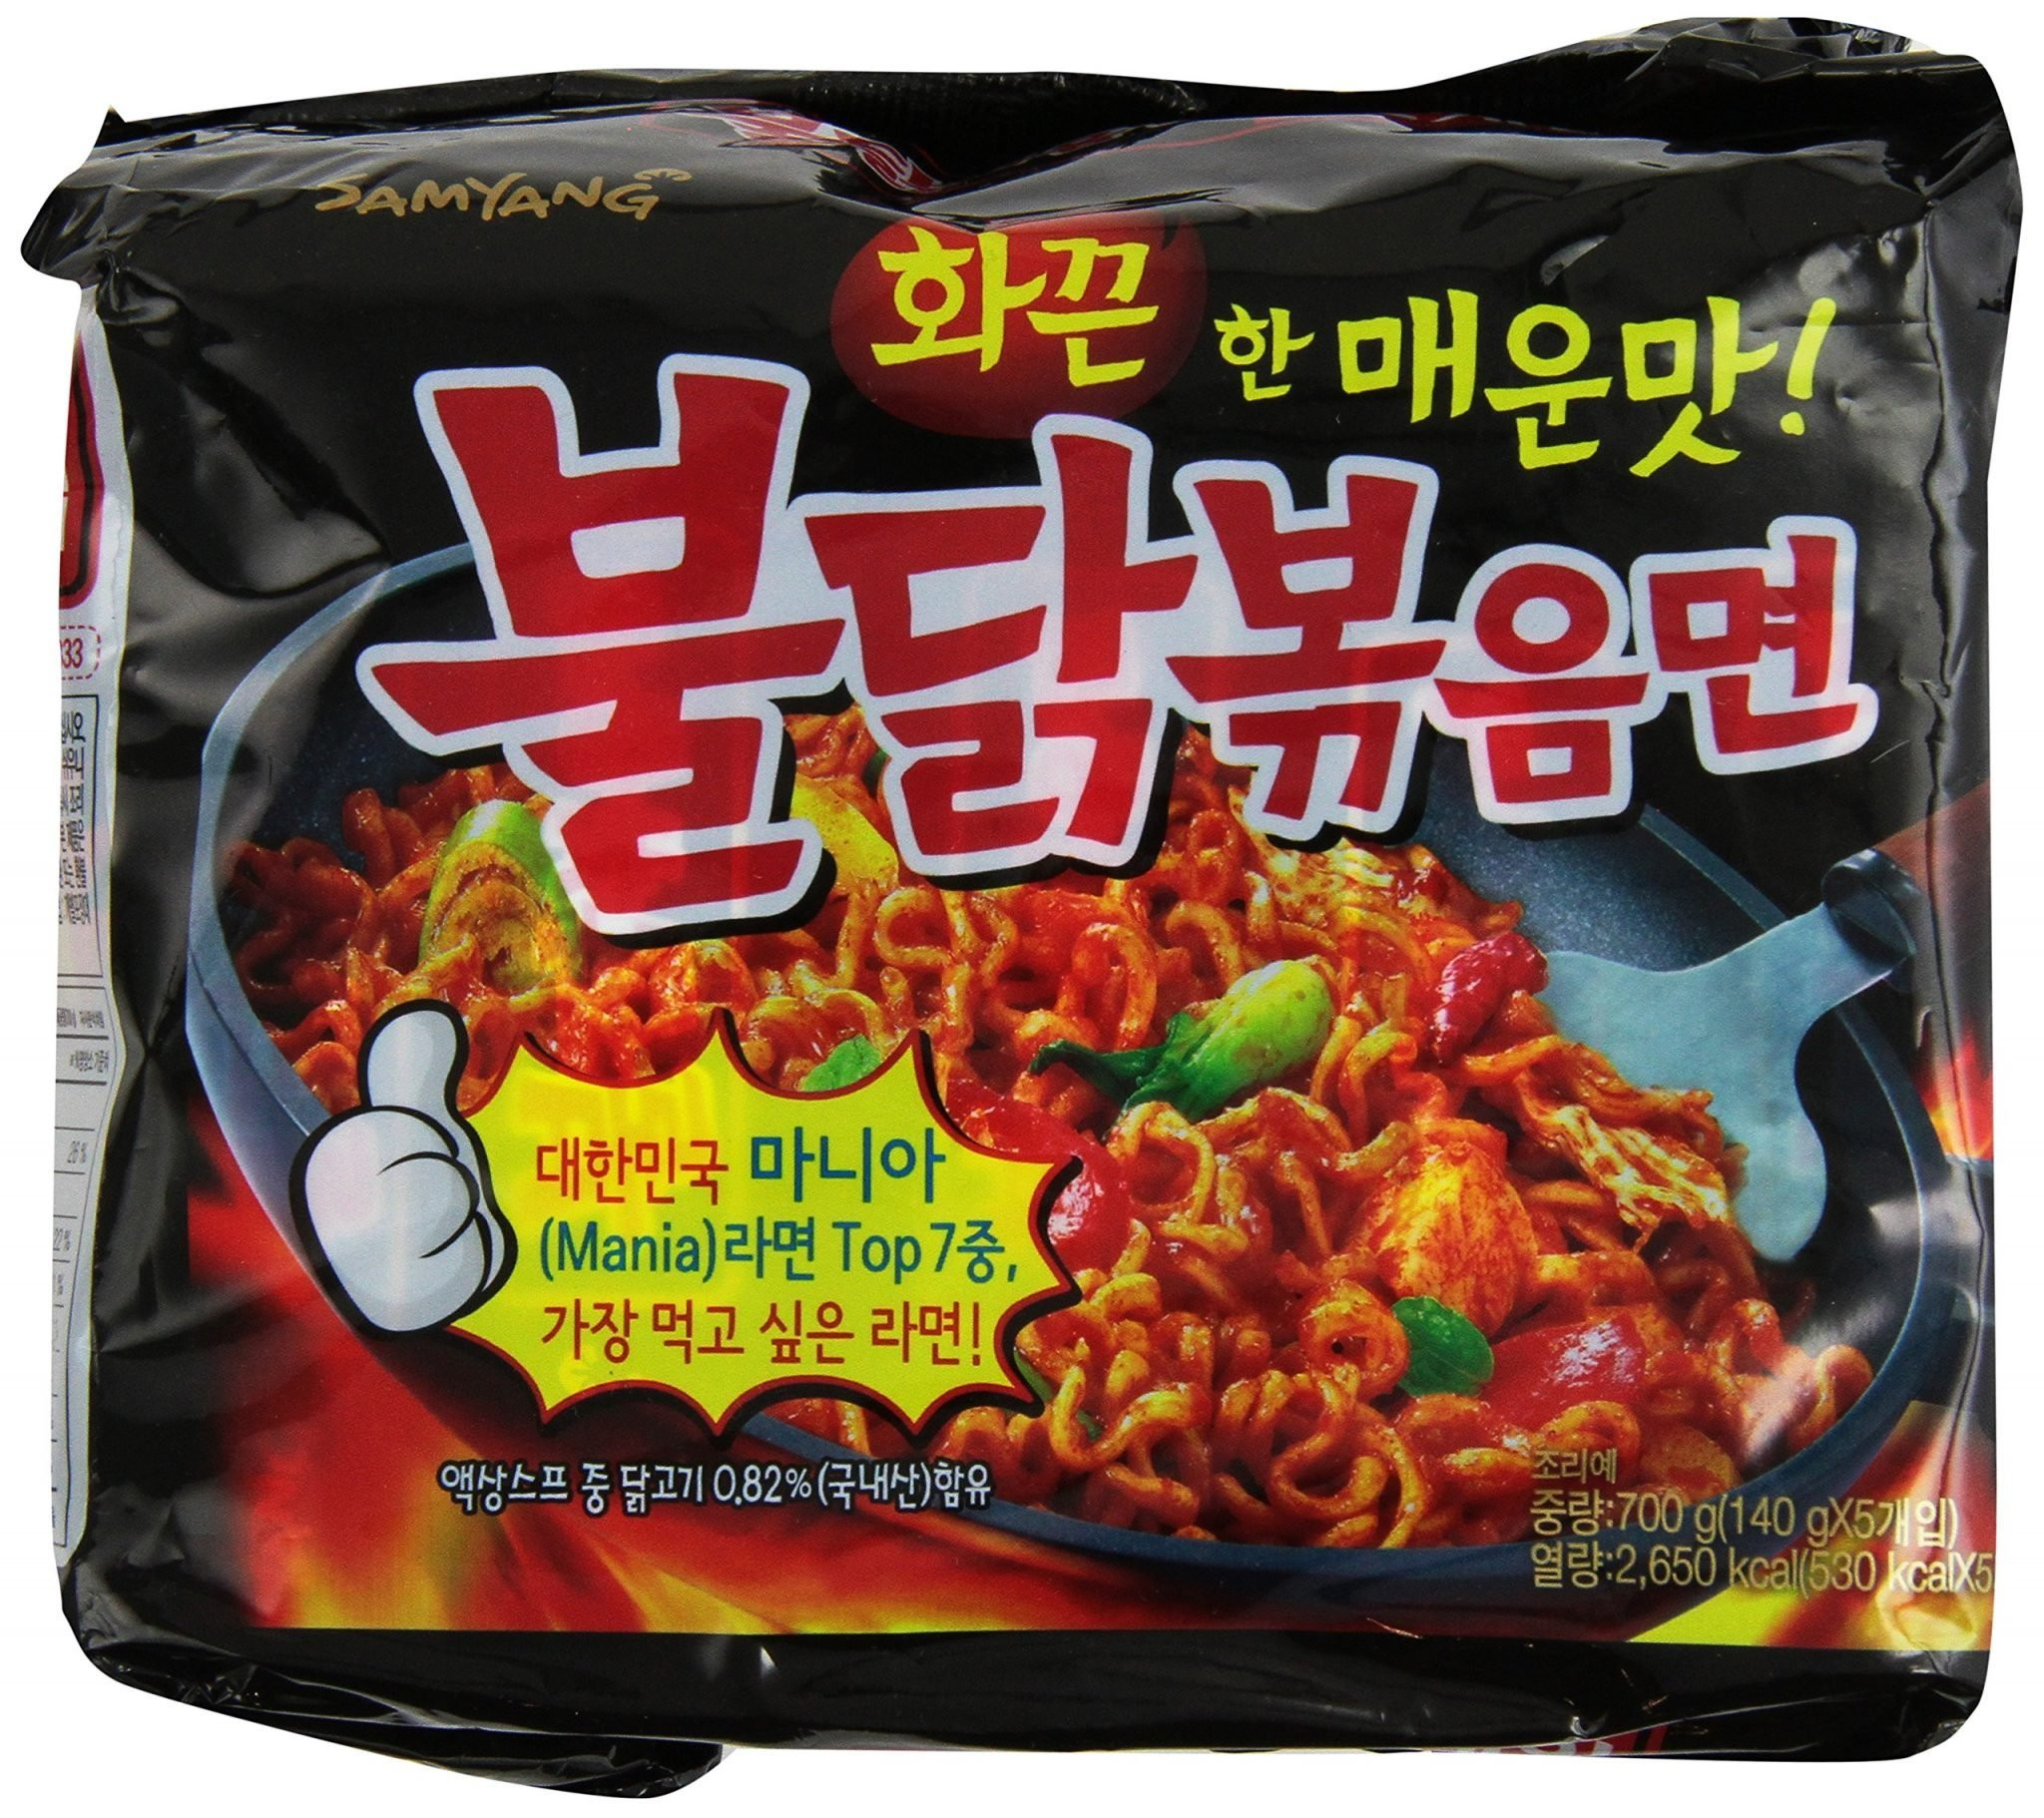 Hot Ramen Noodles
 Amazon Samyang 2X Spicy Hot Chicken Flavor Ramen 1